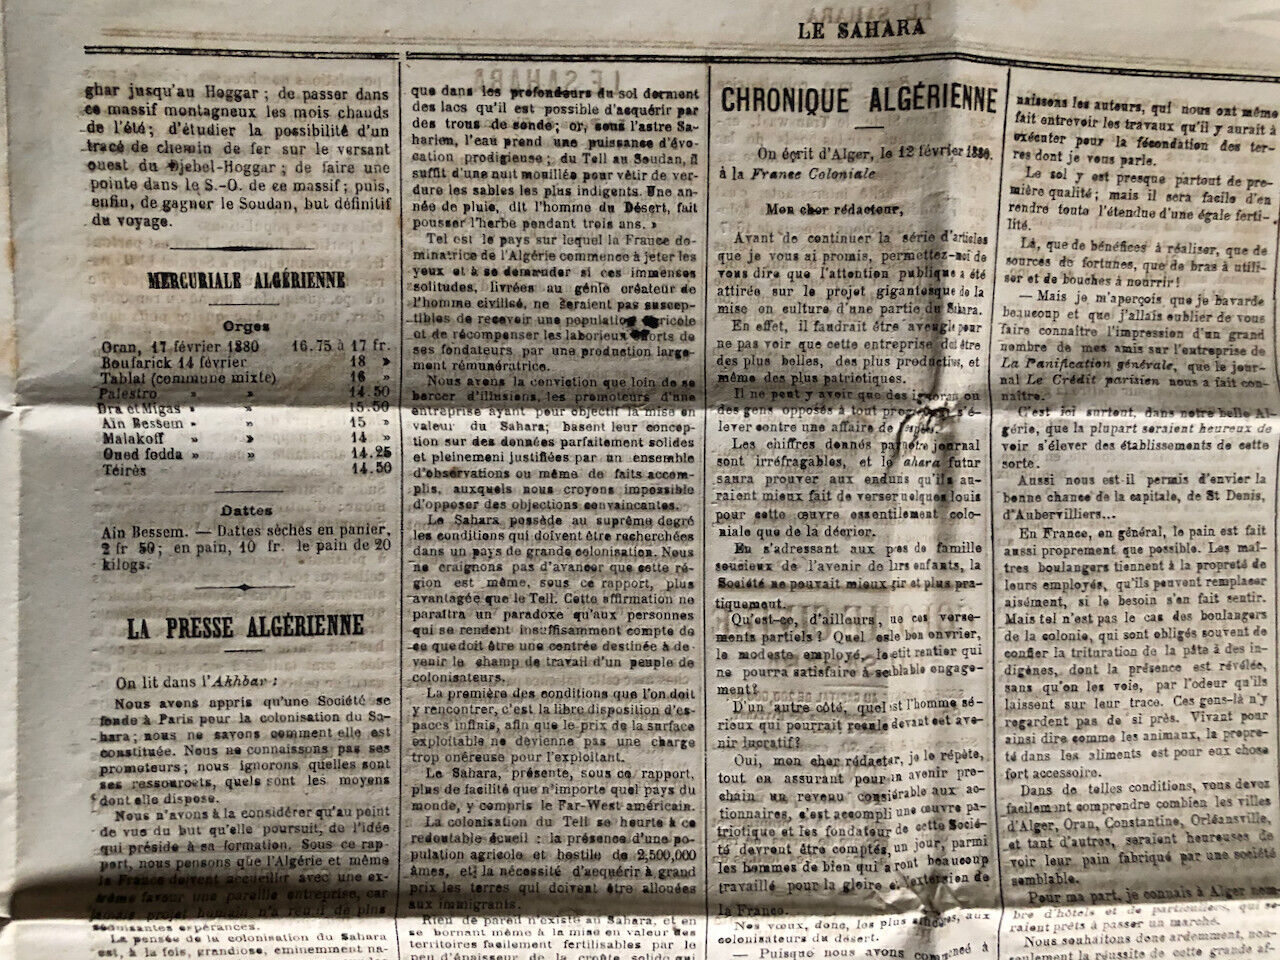 Bimensuel Le Sahara - organe de la France africaine — colonies — n° 2 — 1880.